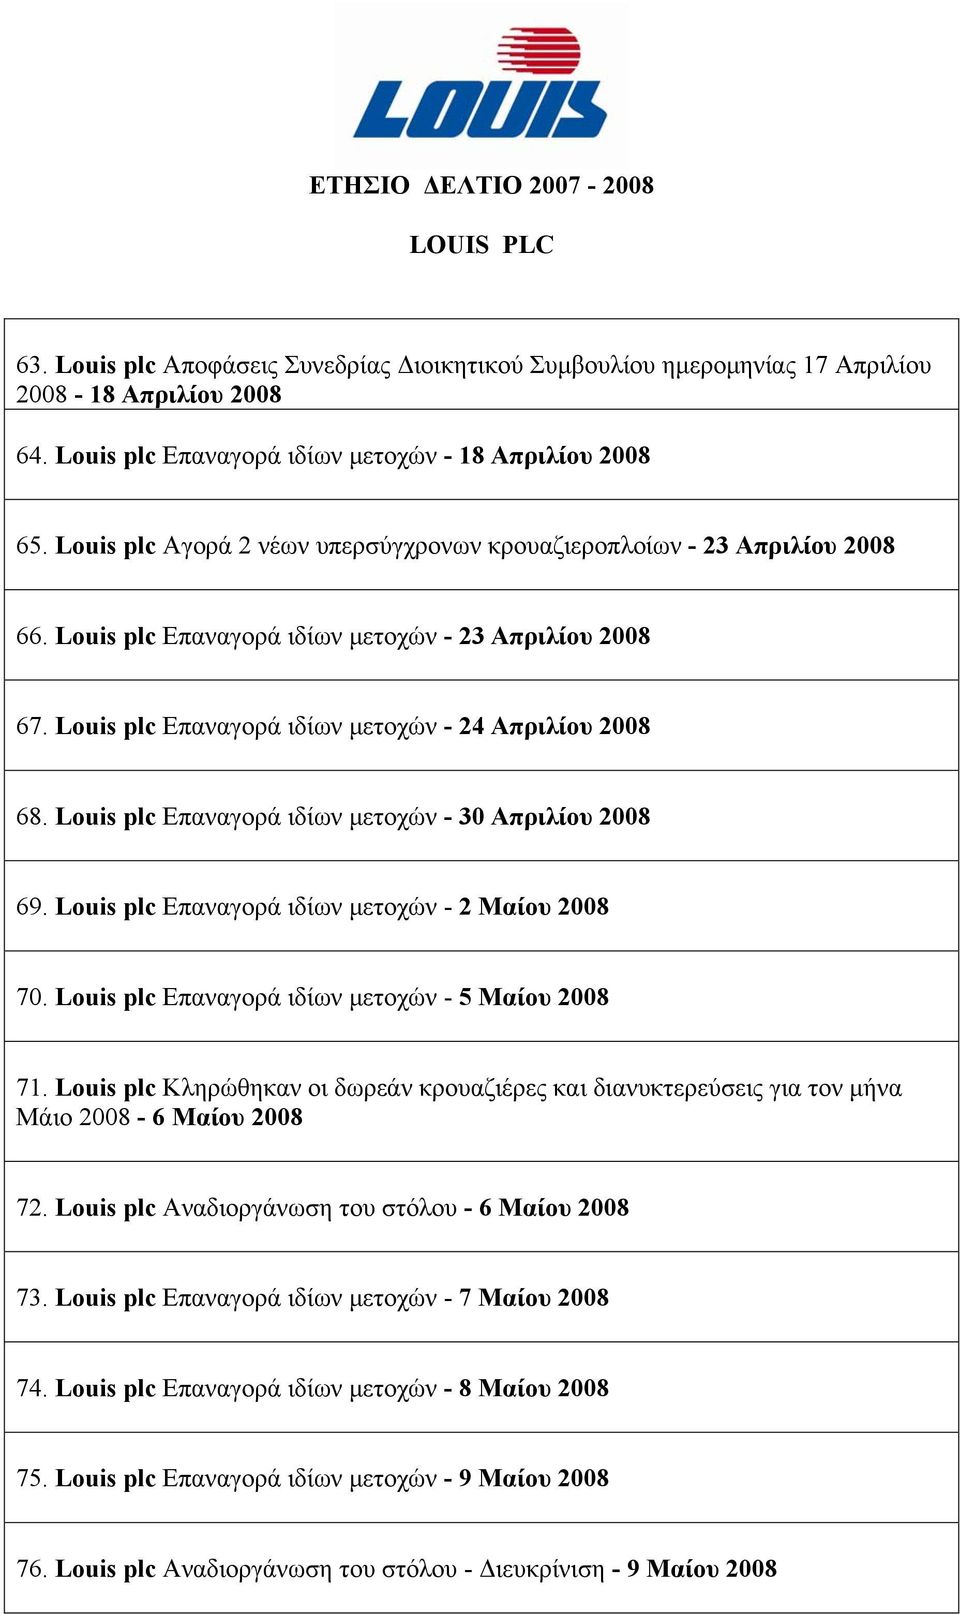 Louis plc Επαναγορά ιδίων μετοχών - 30 Απριλίου 2008 69. Louis plc Επαναγορά ιδίων μετοχών - 2 Μαίου 2008 70. Louis plc Επαναγορά ιδίων μετοχών - 5 Μαίου 2008 71.